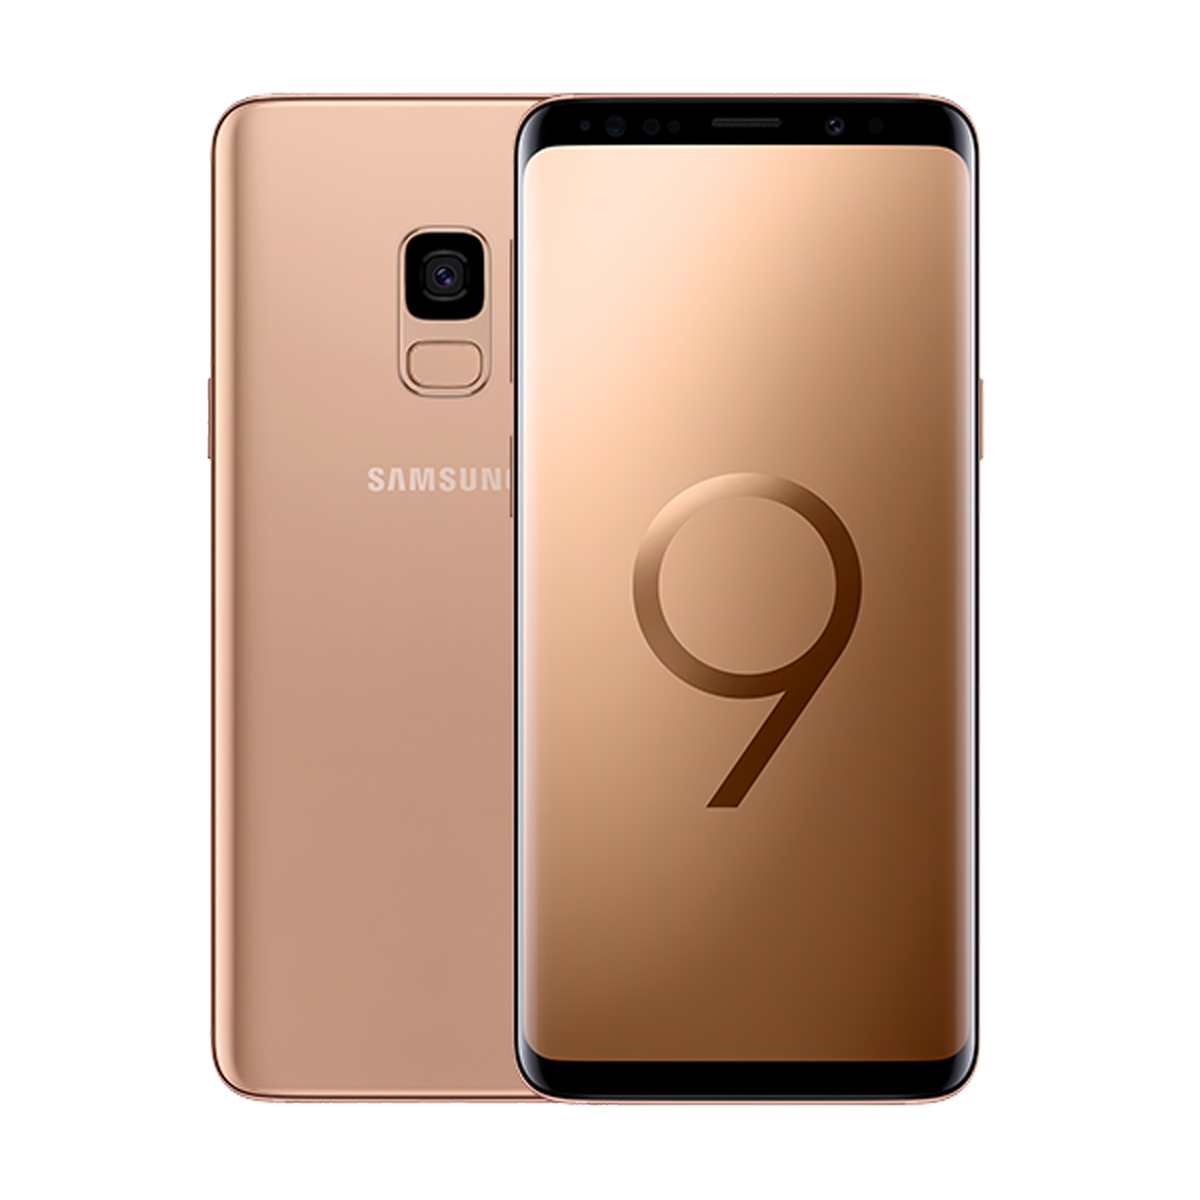 Refurbished Samsung Galaxy S9 64 GB Gold A-grade